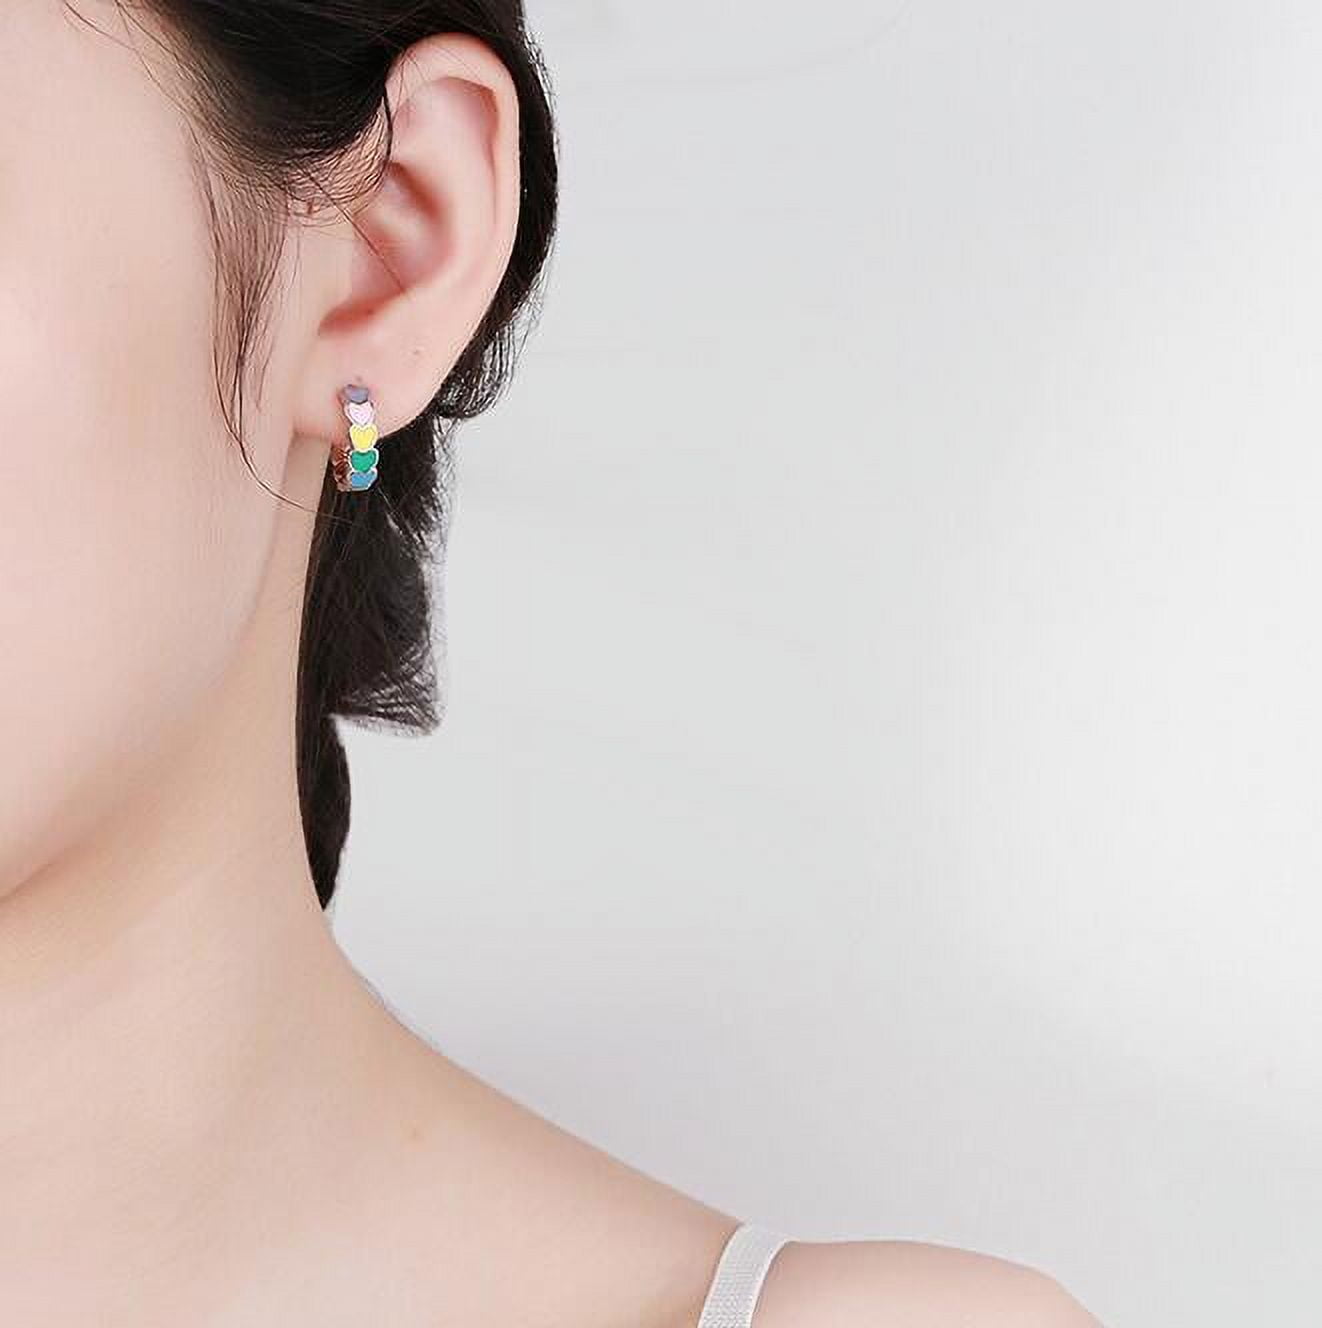 JEWELCHOICE Small Size Plain Bali Silver Hoops Earrings in Pure 92.5  Sterling Silver for Kids/Girls/